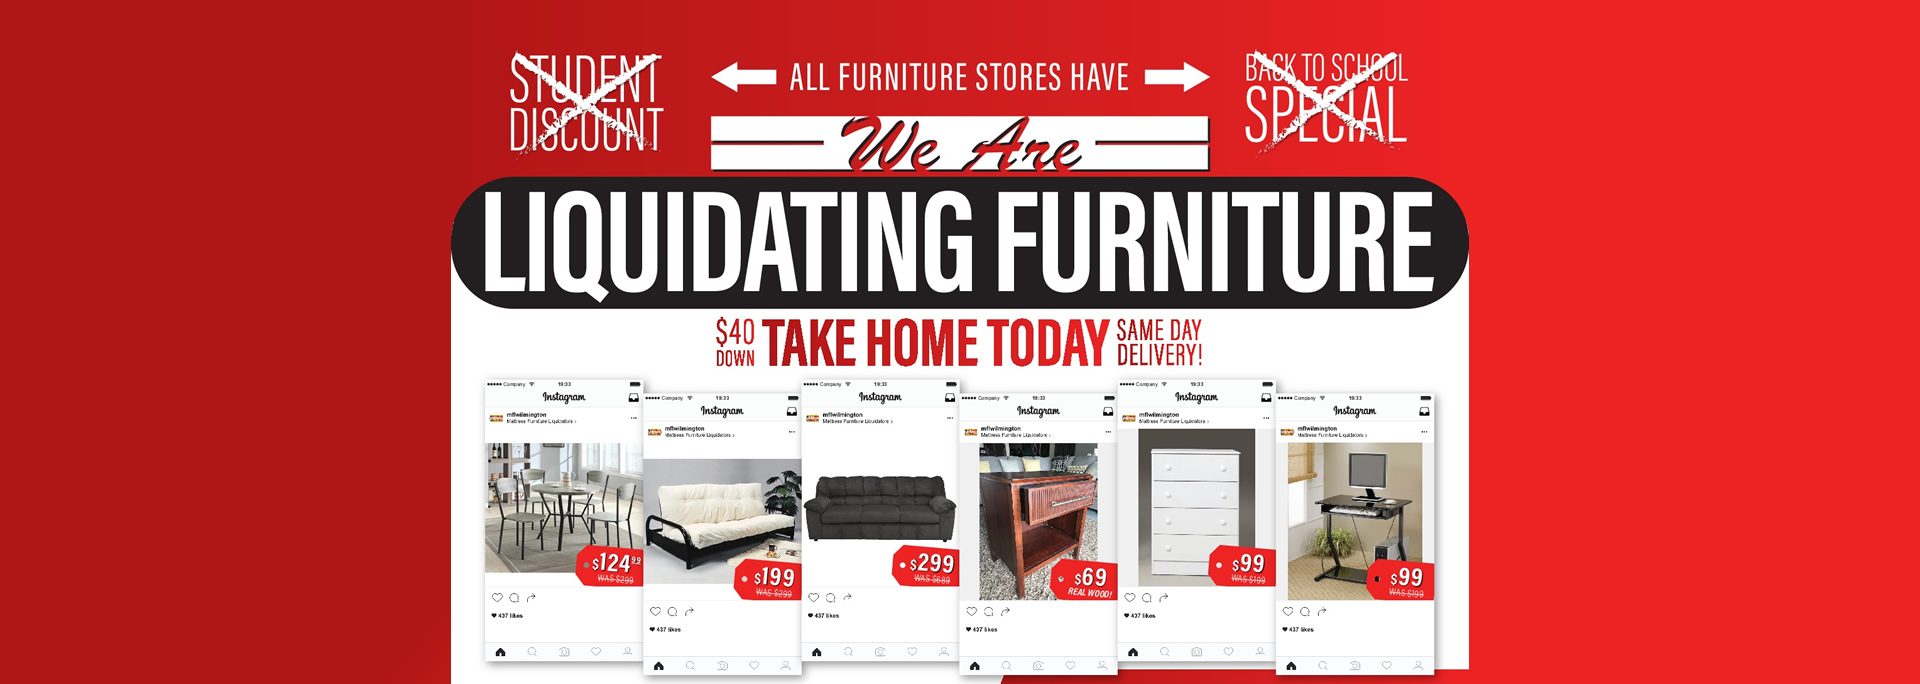 Mattress Furniture Liquidation Name Brands At Discount Prices